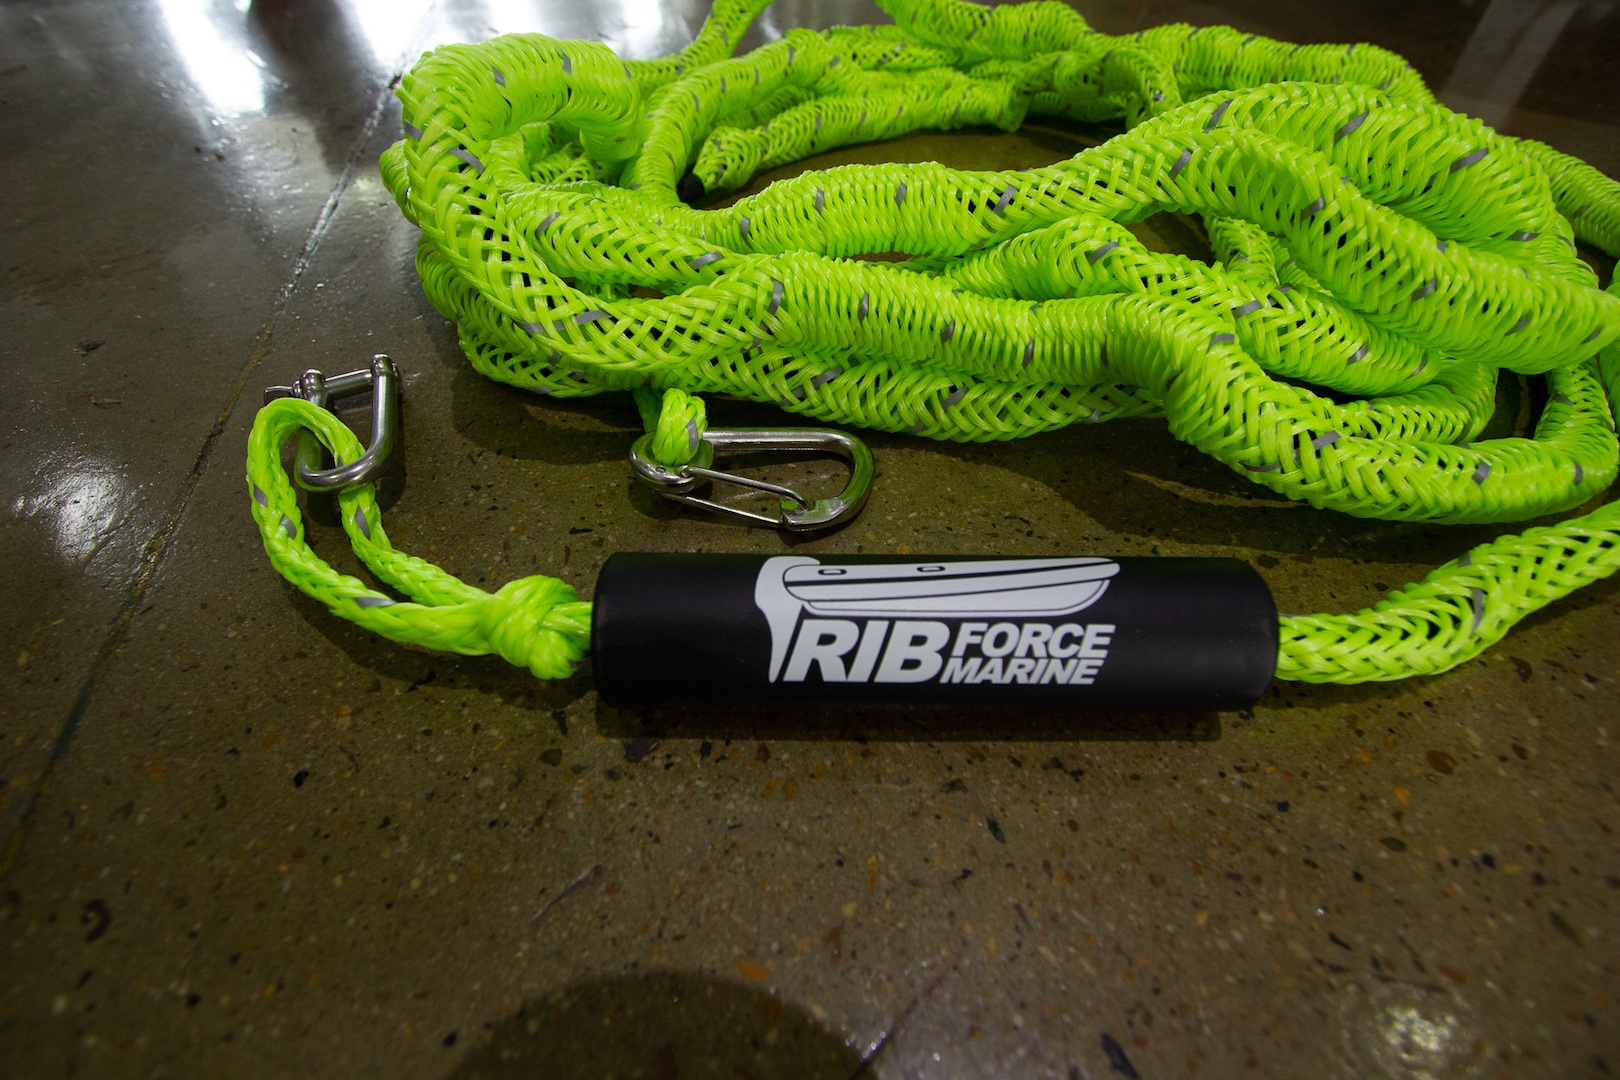 RIB Force Inflatables – Bungy Rope | RIB ForceRIB Force